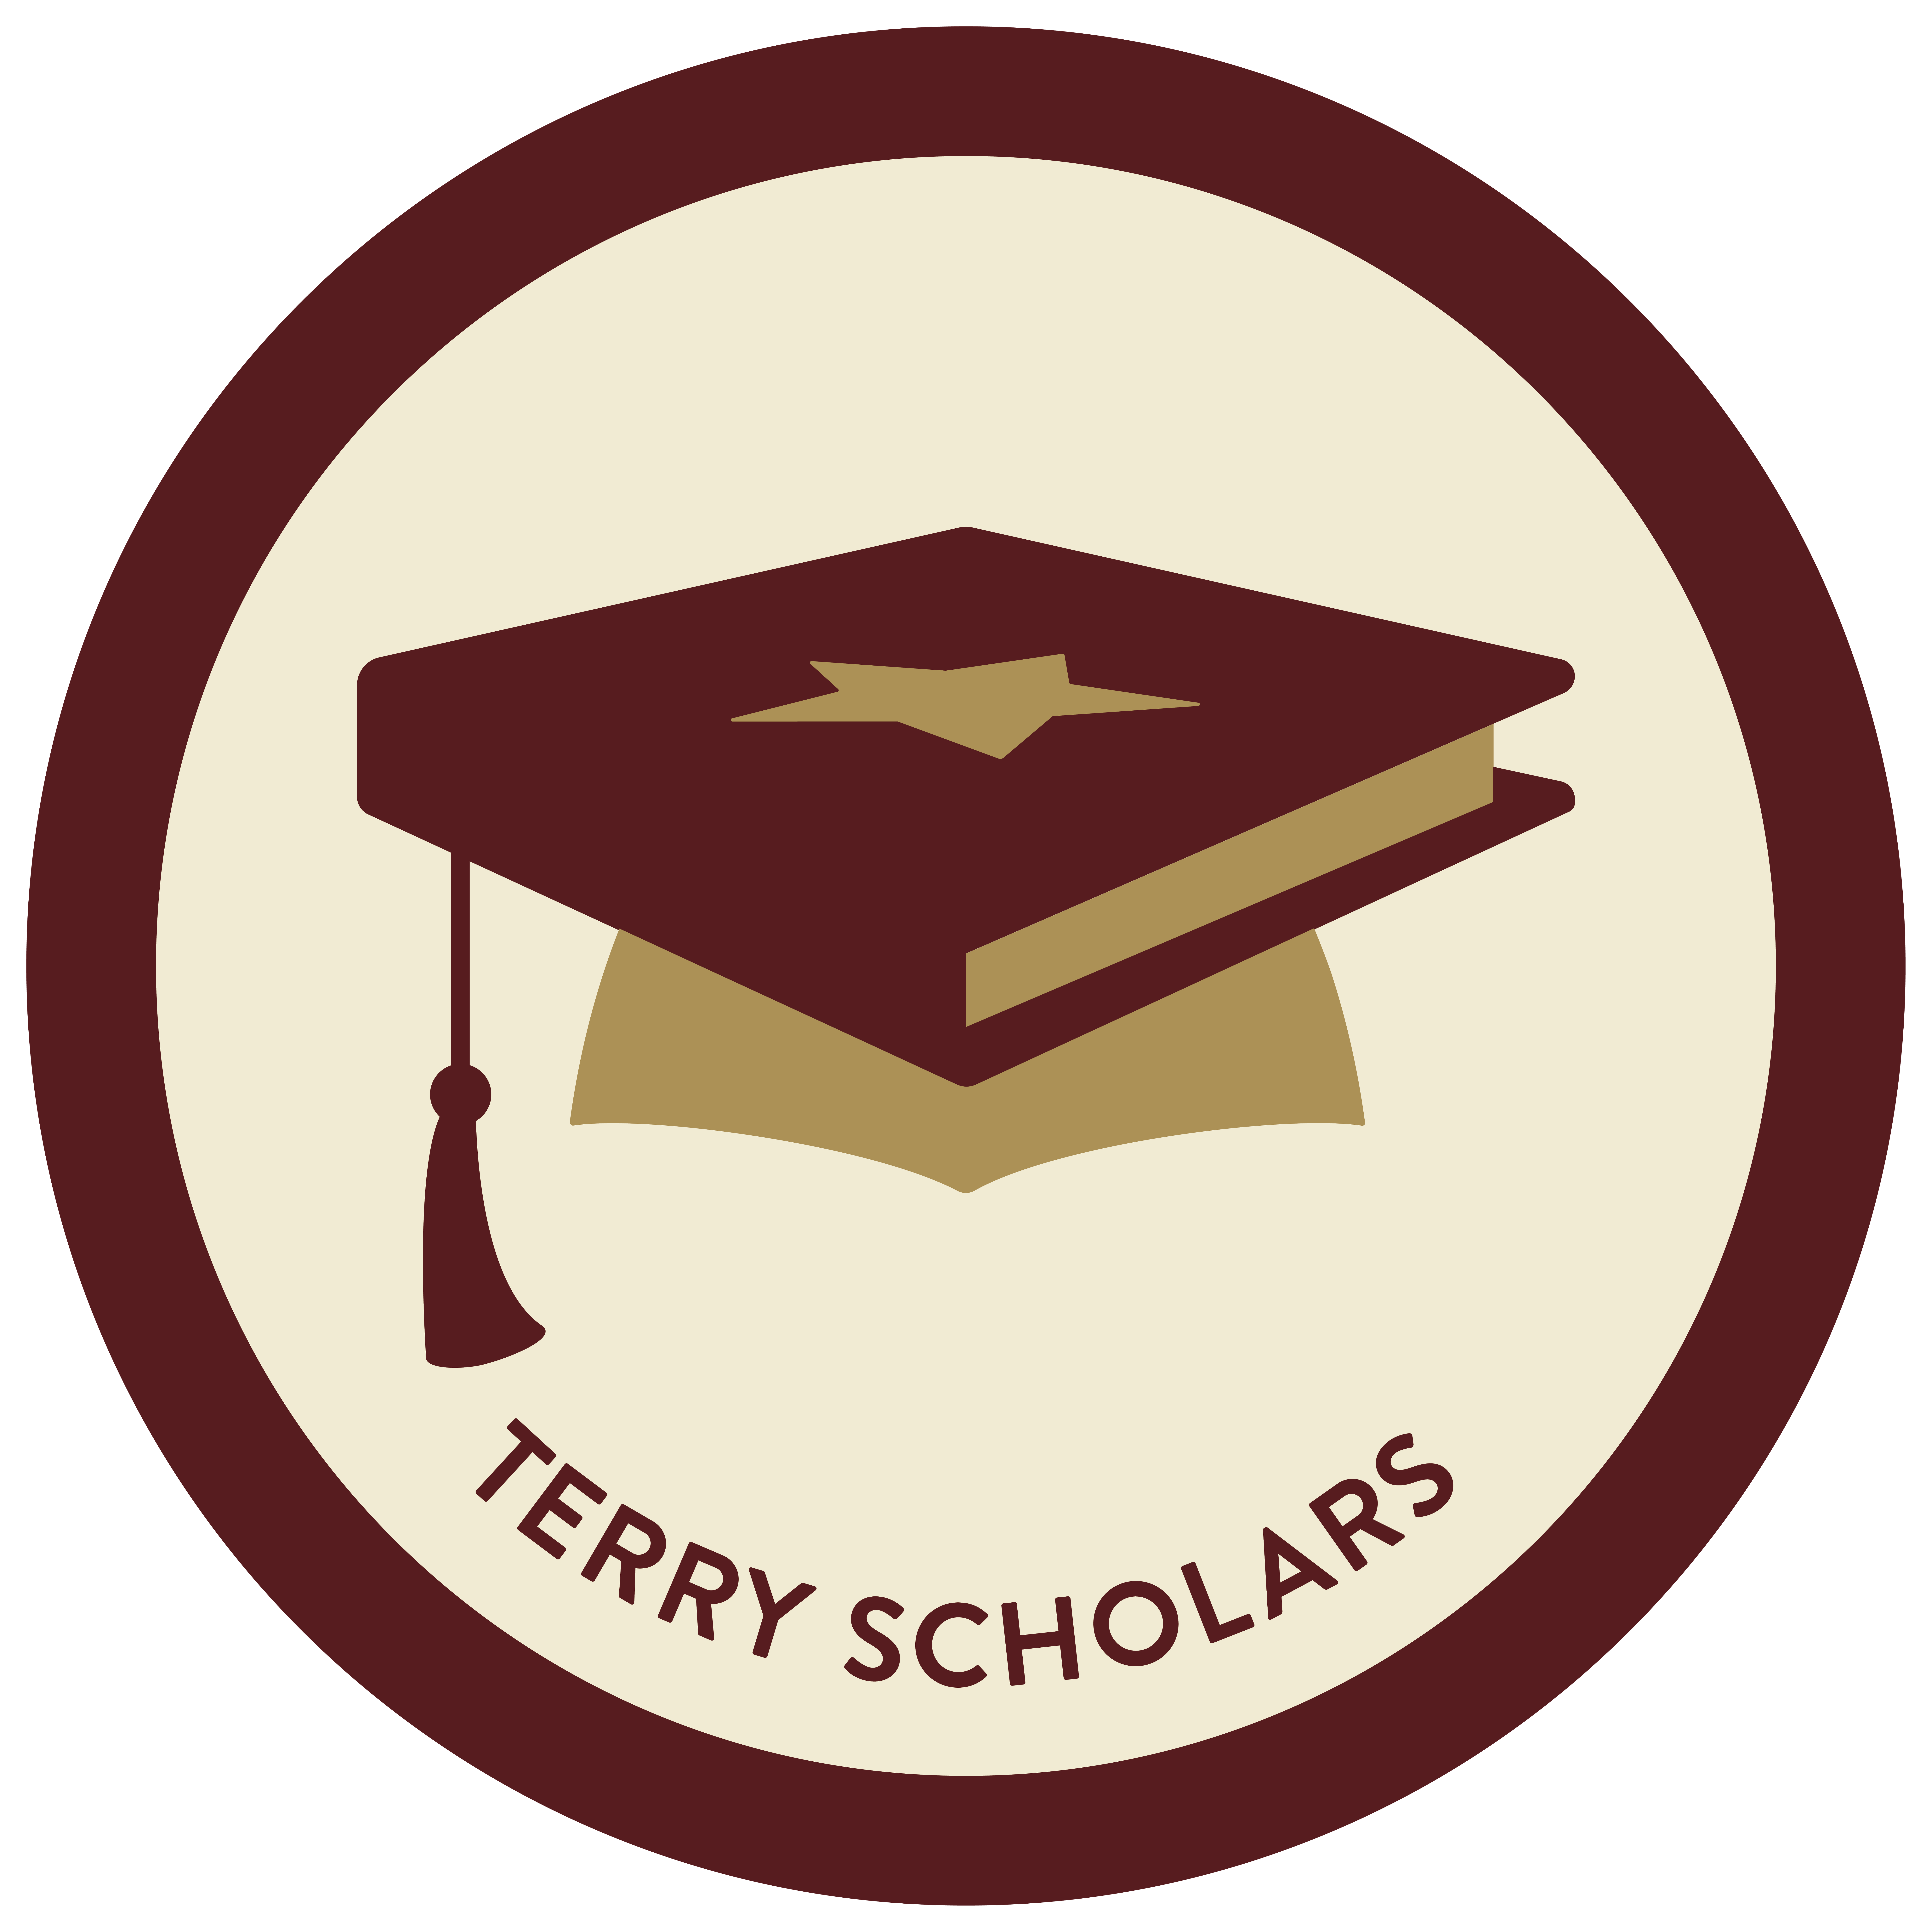 Terry Scholars LLC